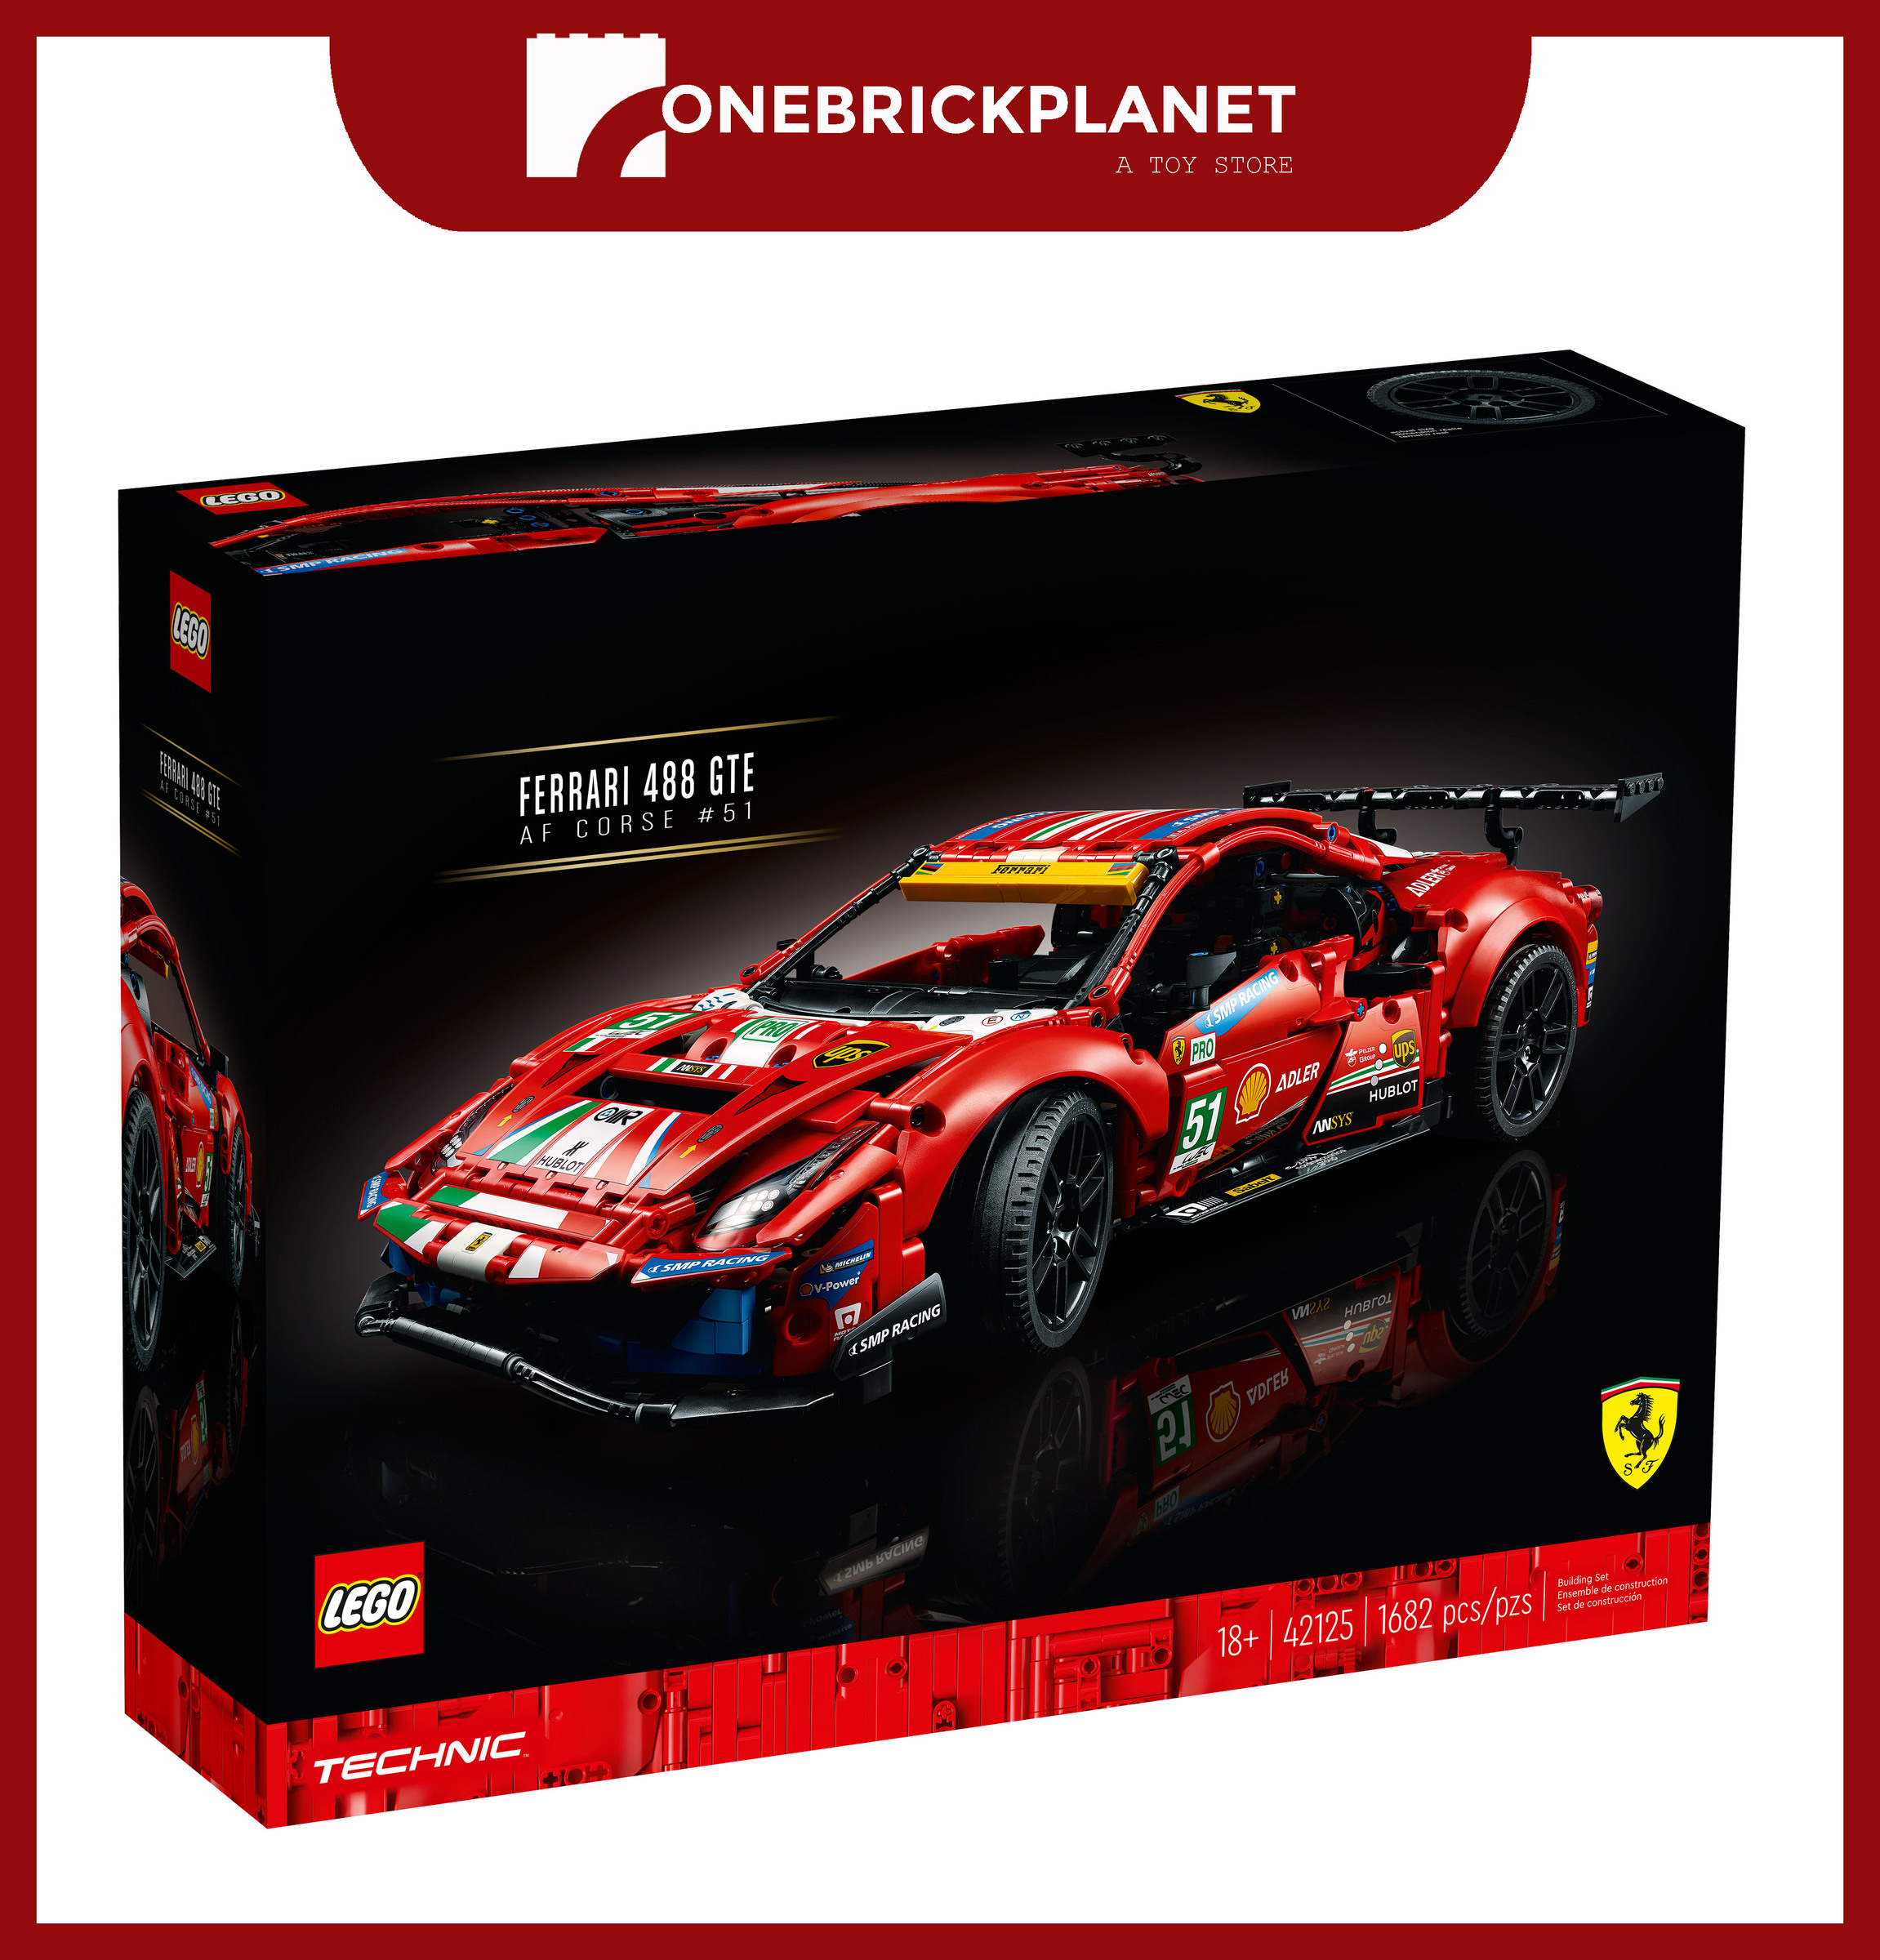 LEGO 42125 Technic - Ferrari 488 GTE AF Corse #51 – One Brick Planet